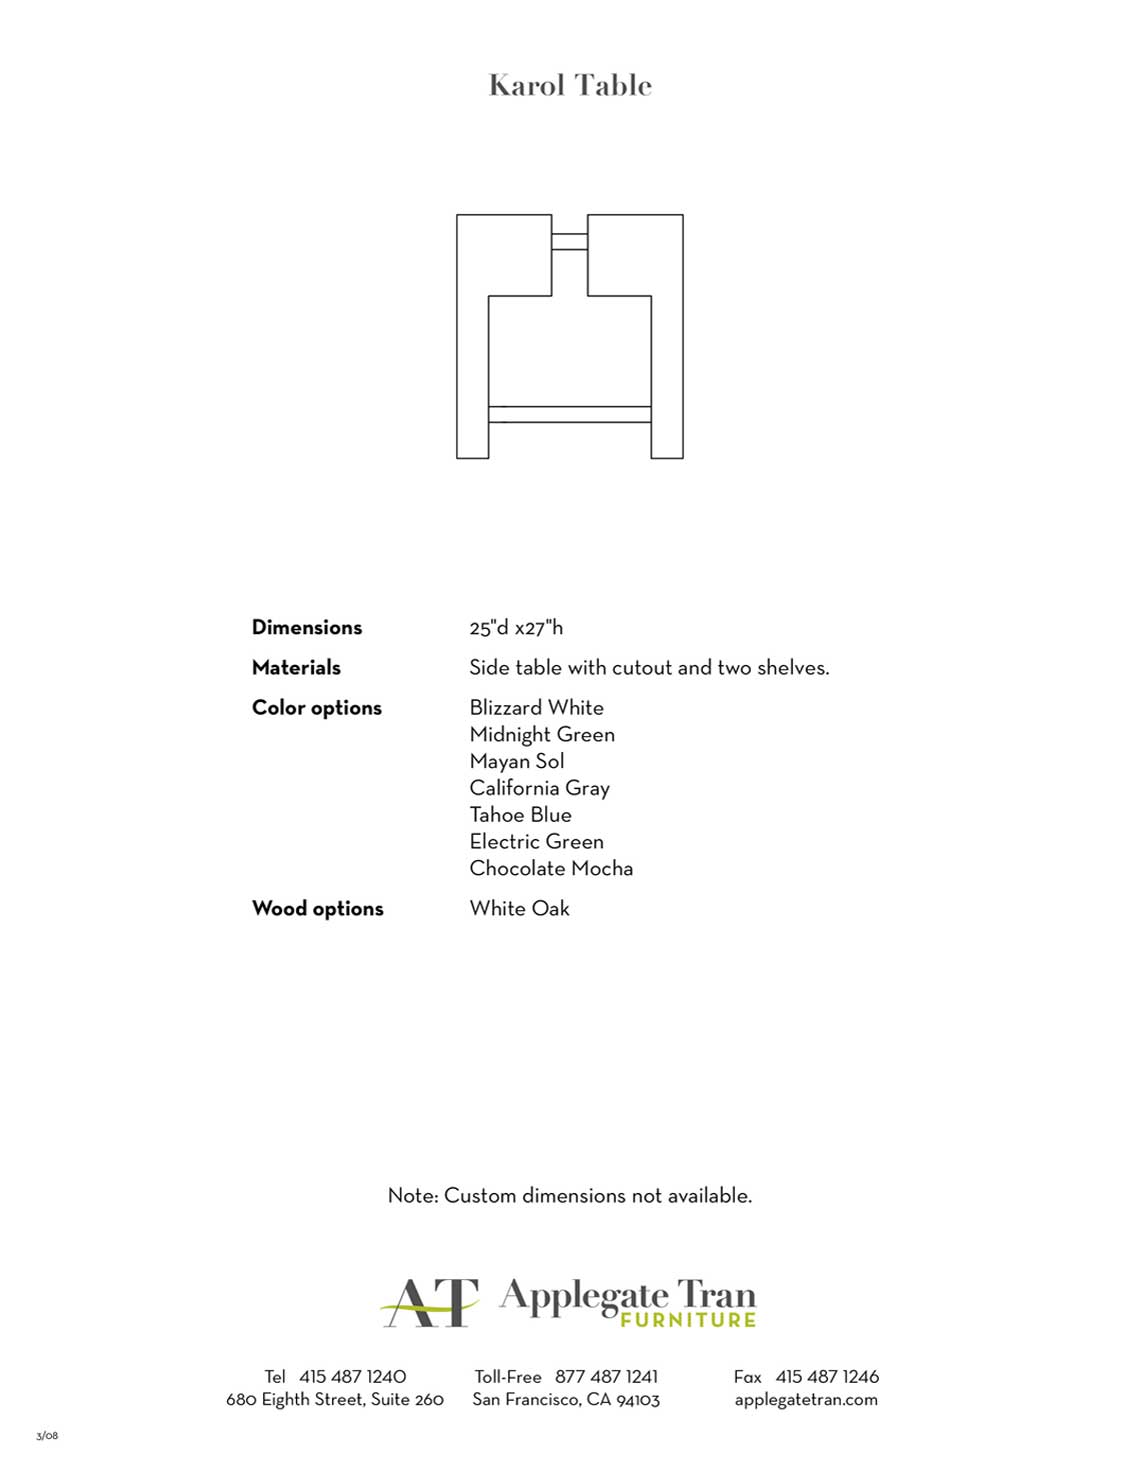 Applegate Tran Furniture Product Sheet